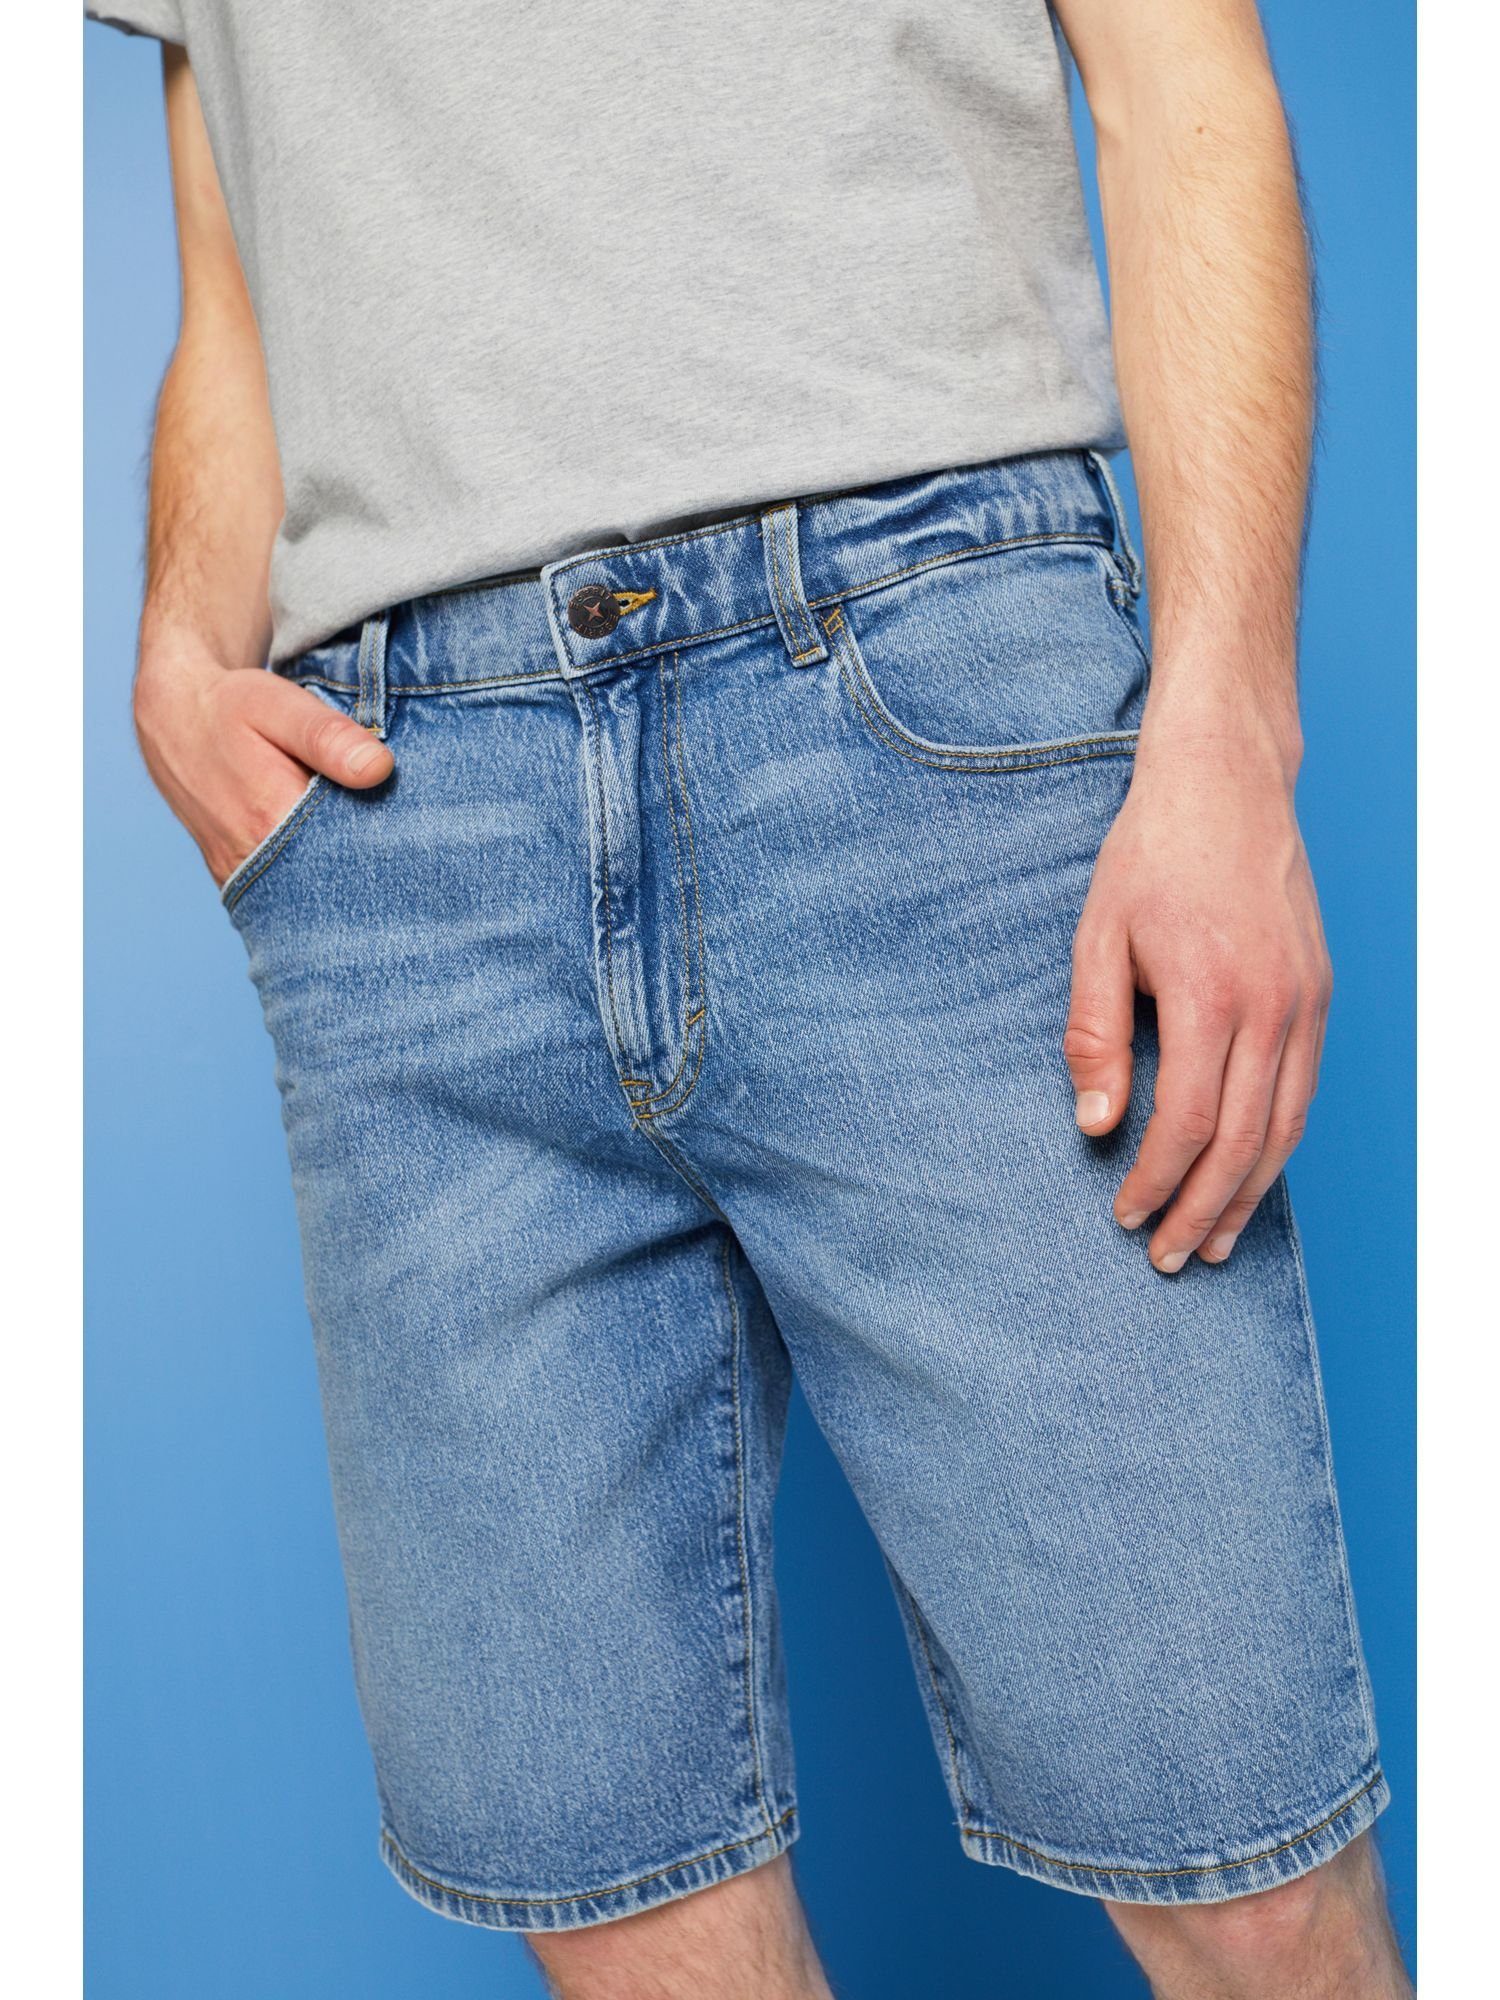 MEDIUM Jeansshorts Jeans-Bermudashorts by Esprit BLUE edc WASHED